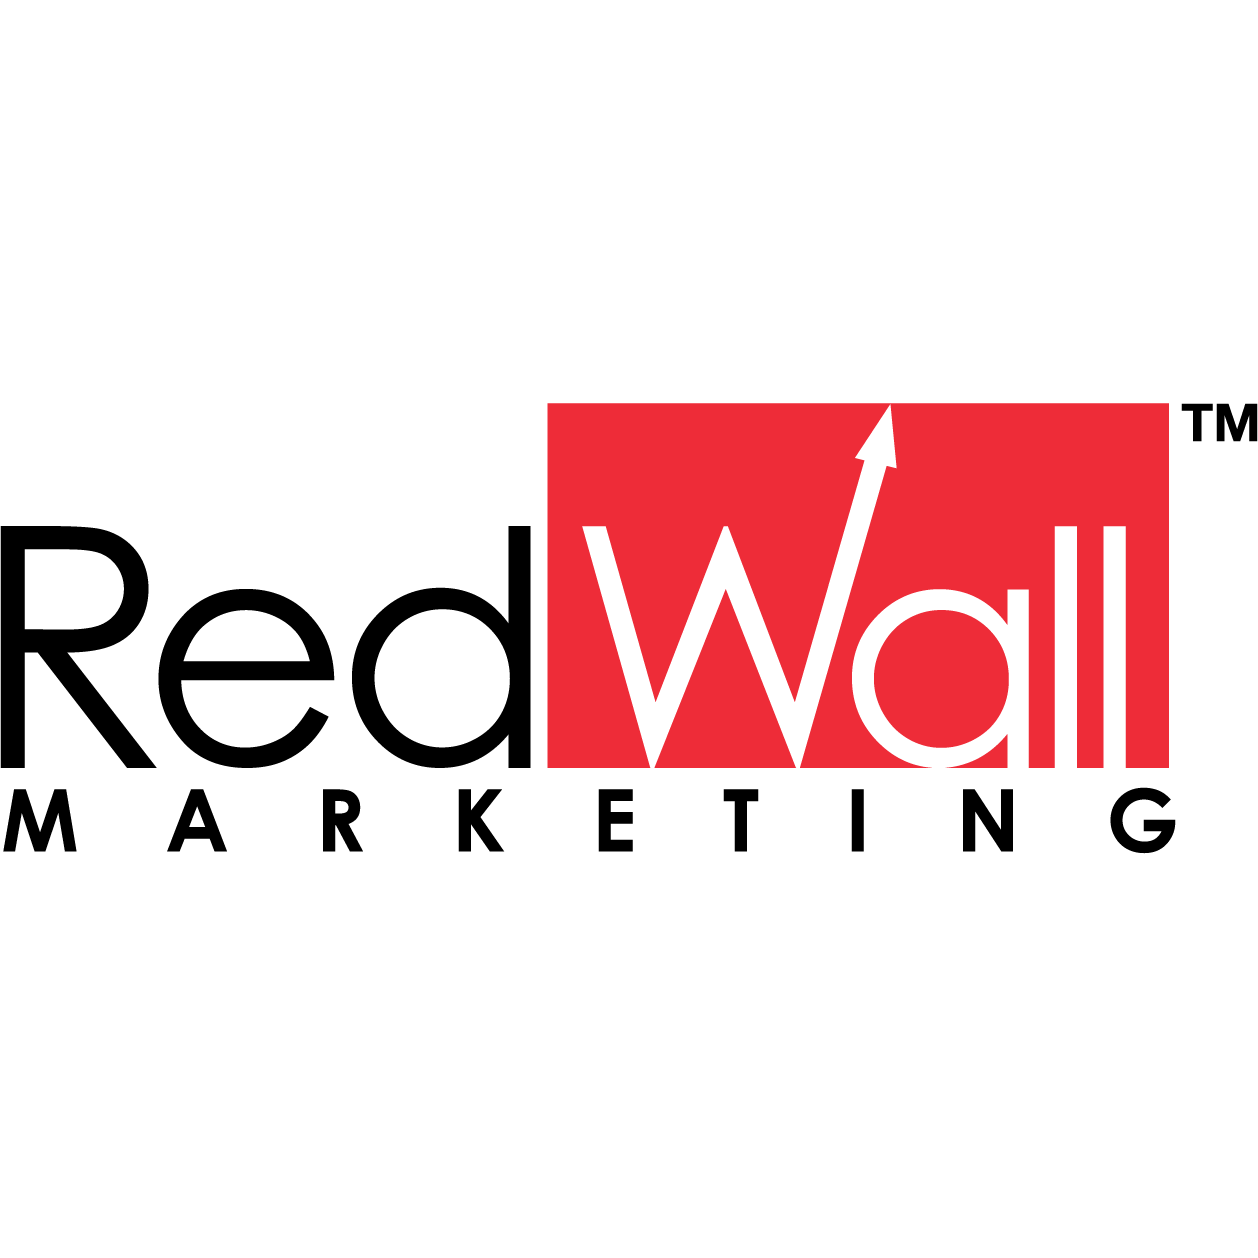 Red Wall Marketing Photo